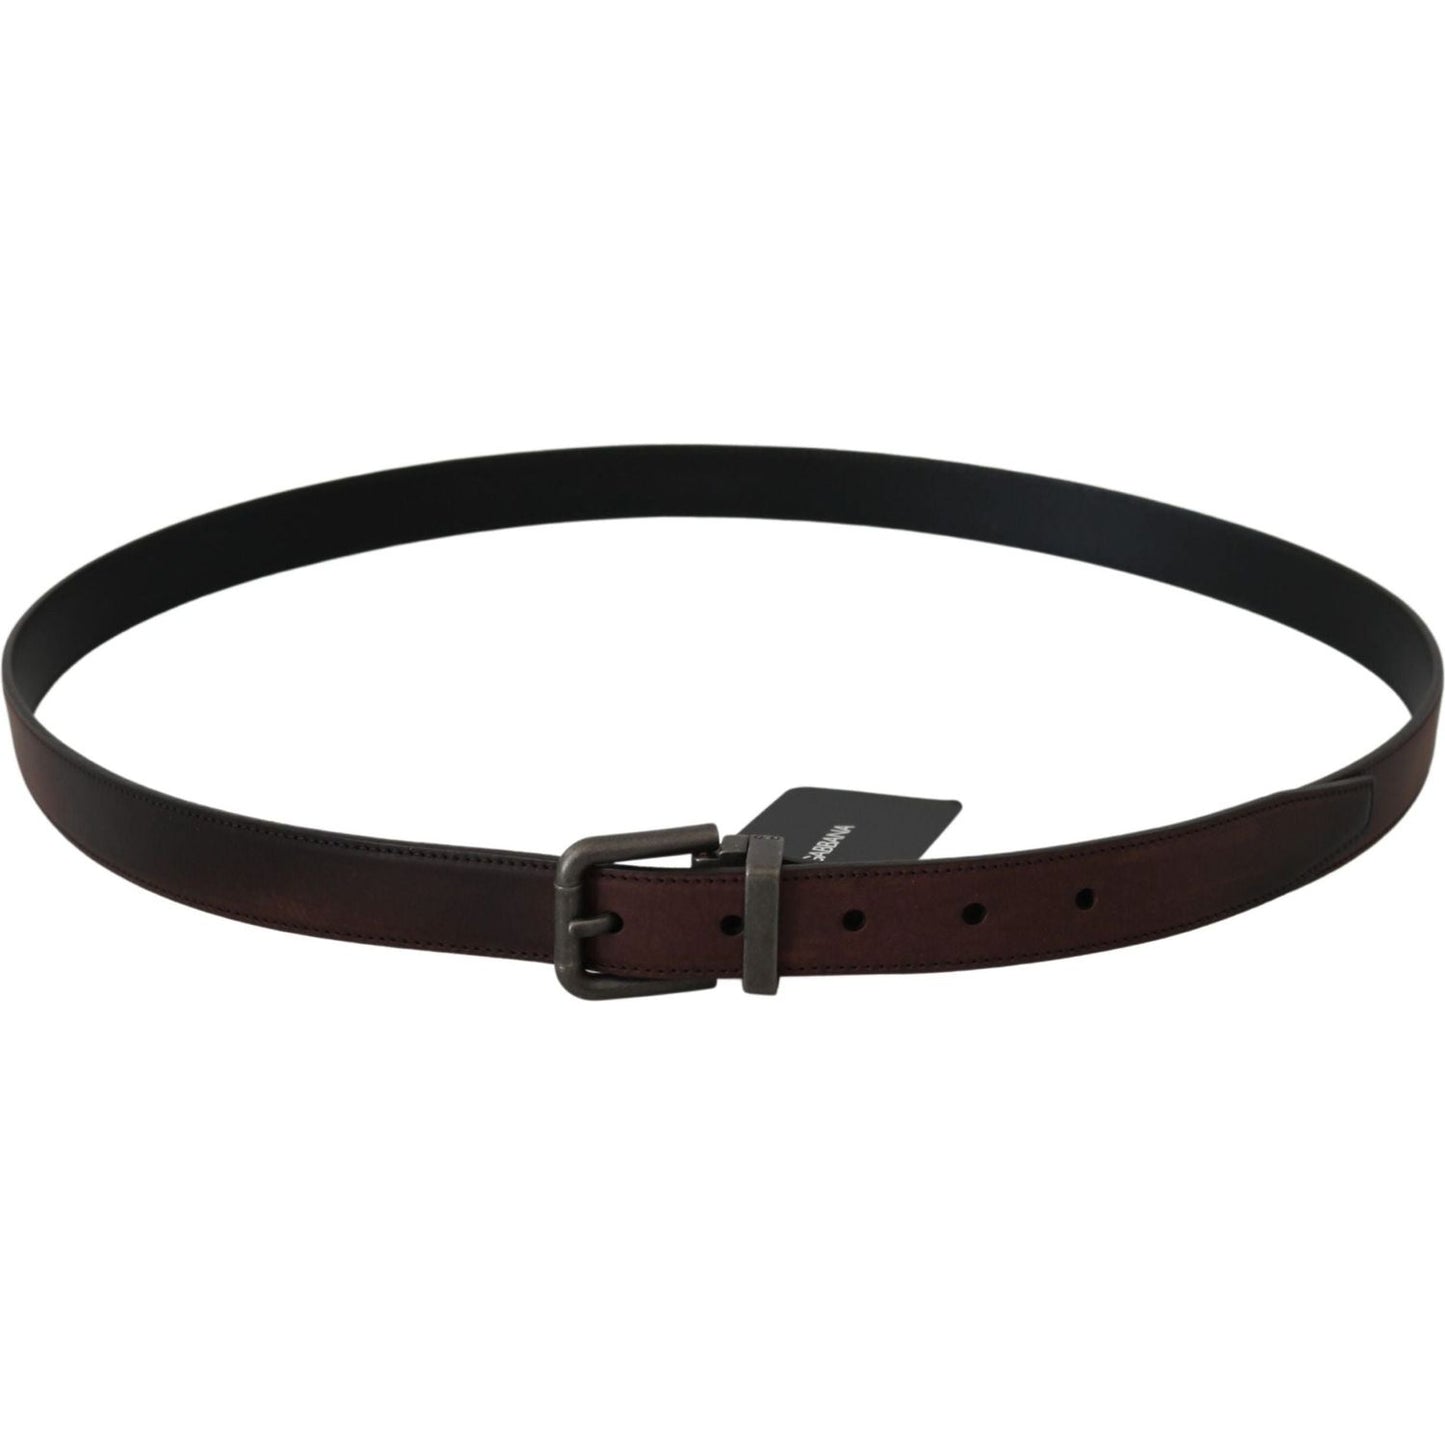 Dolce & Gabbana Elegant Leather Belt in Classic Brown Belt solid-brown-leather-gray-buckle-belt